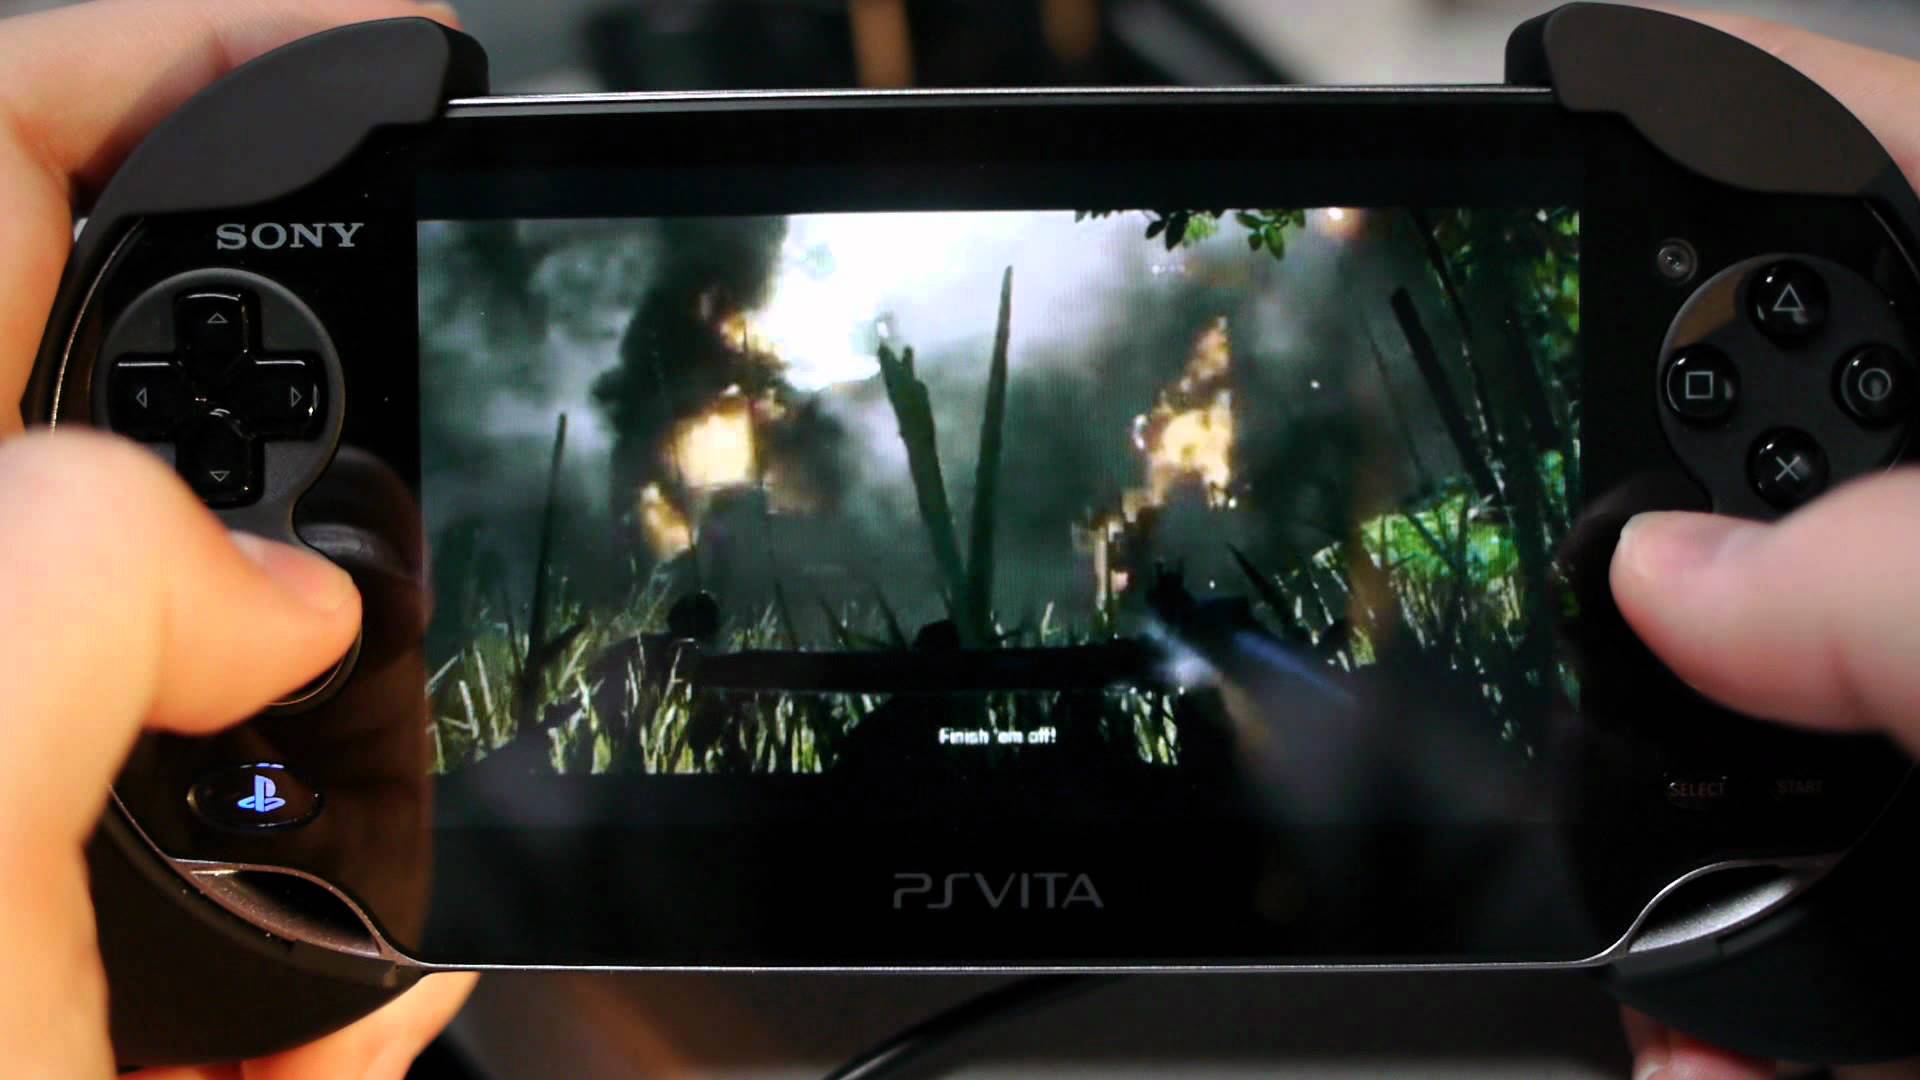 Playstation Vita Battlefield Bad Company 2 1080p HD 3.55CFW remote